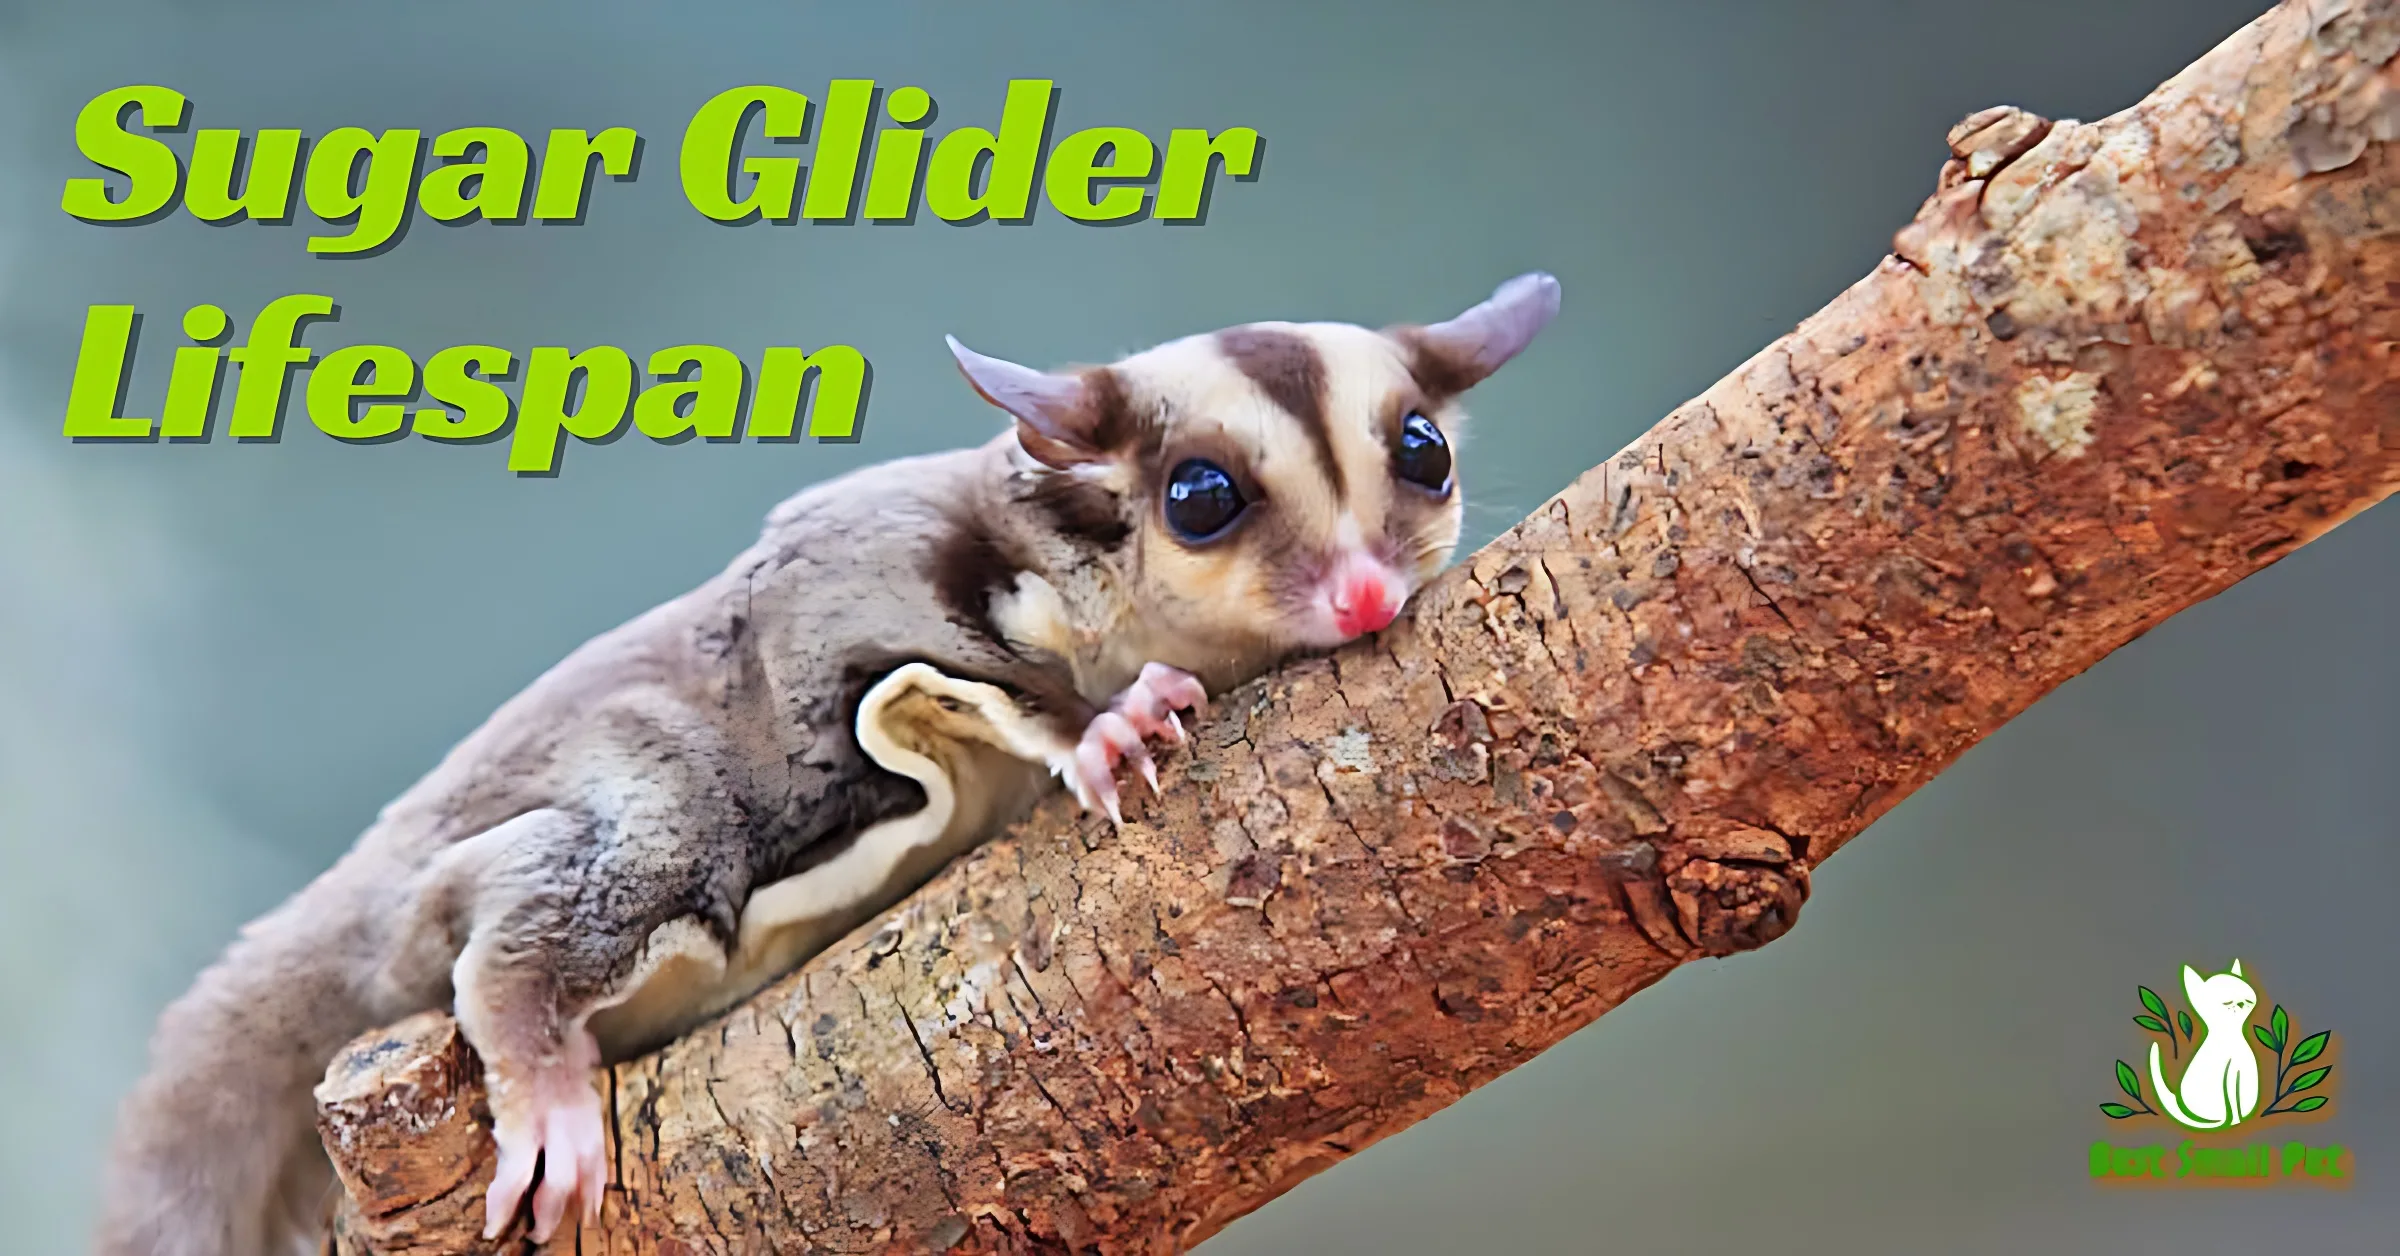 Sugar Glider Lifespan: How Long Do Sugar Gliders Live? 